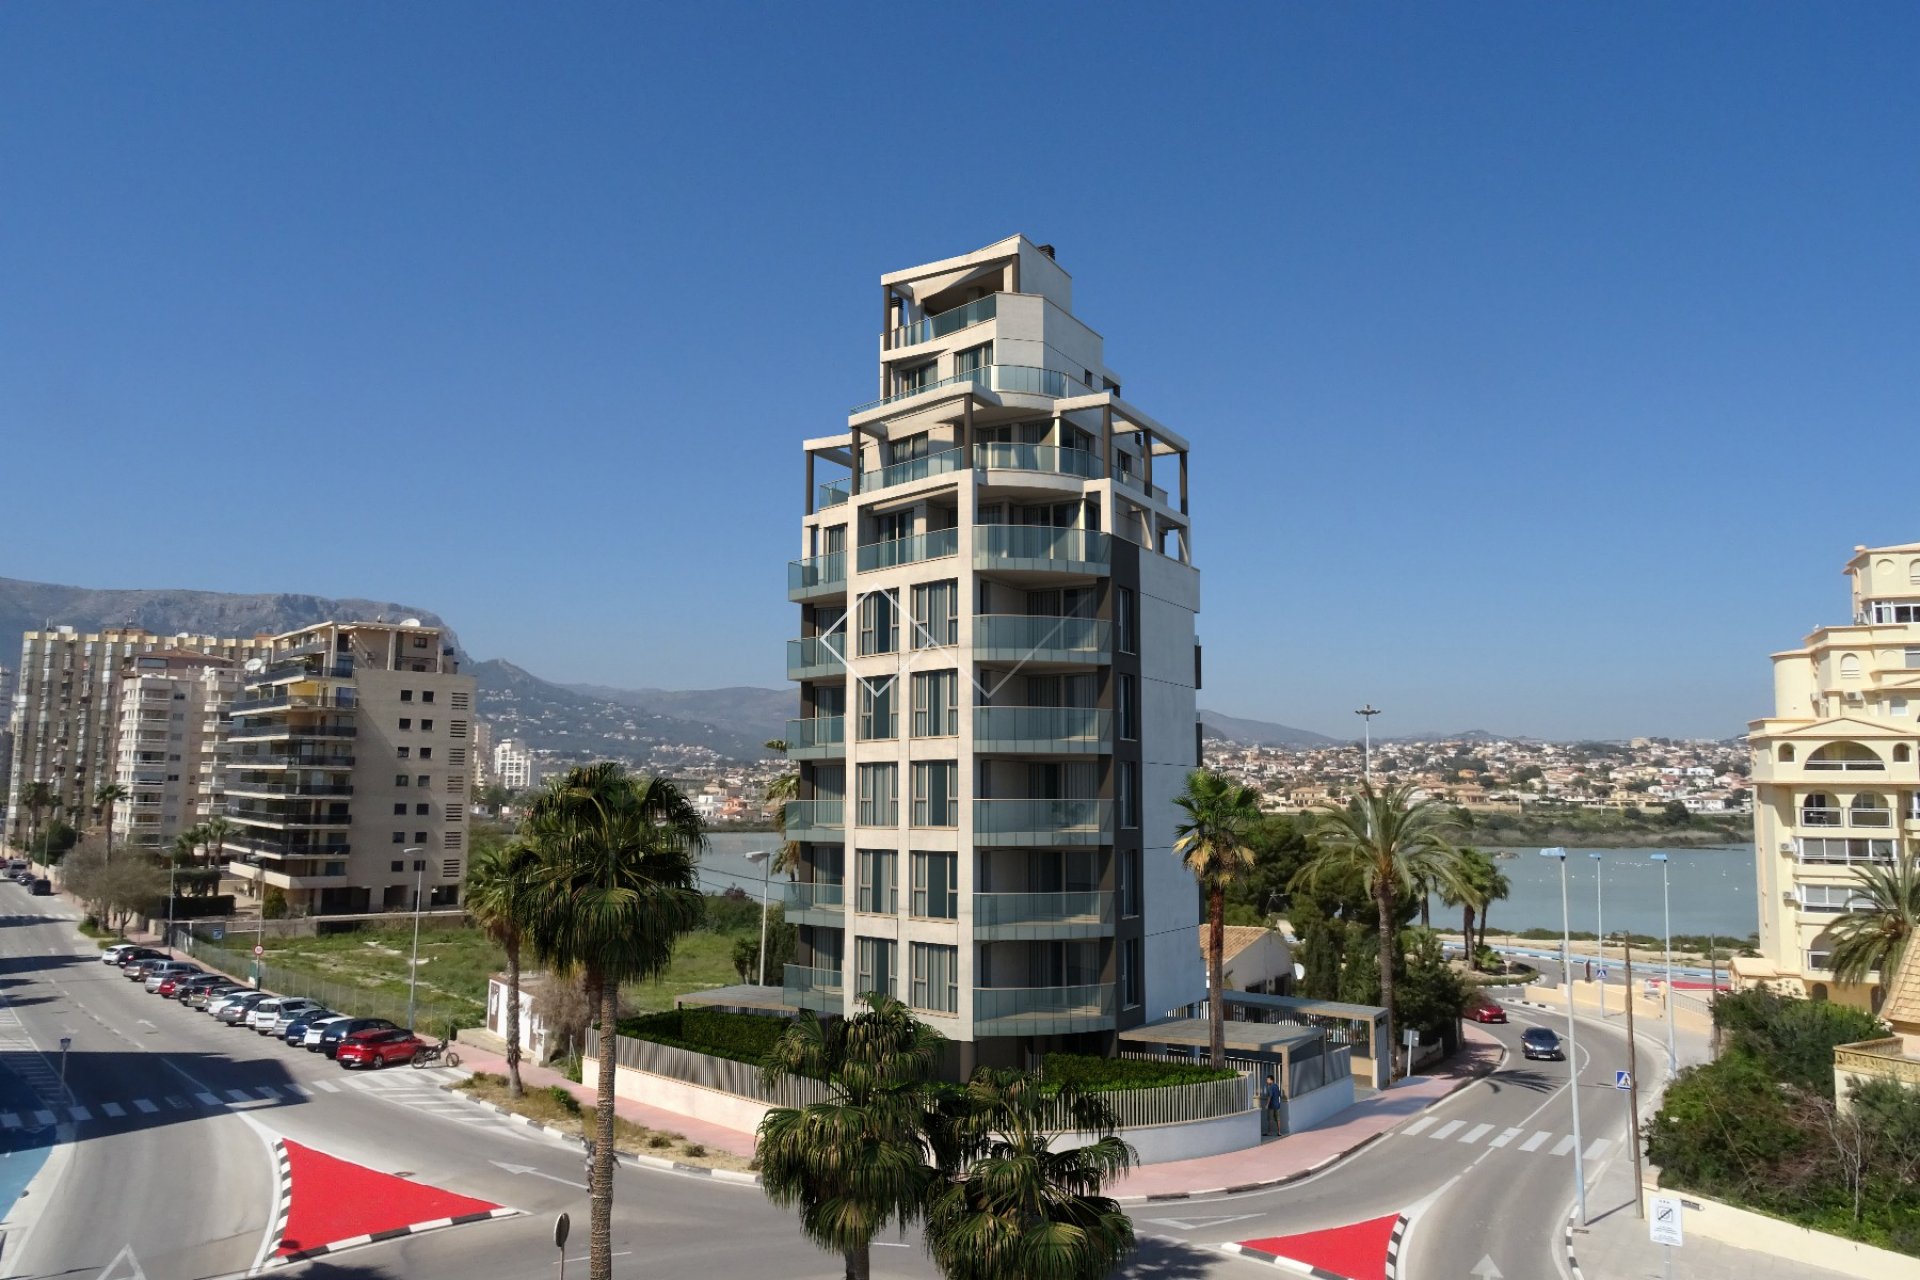 Holamar - Triplex appartement in luxe gebouw in Calpe